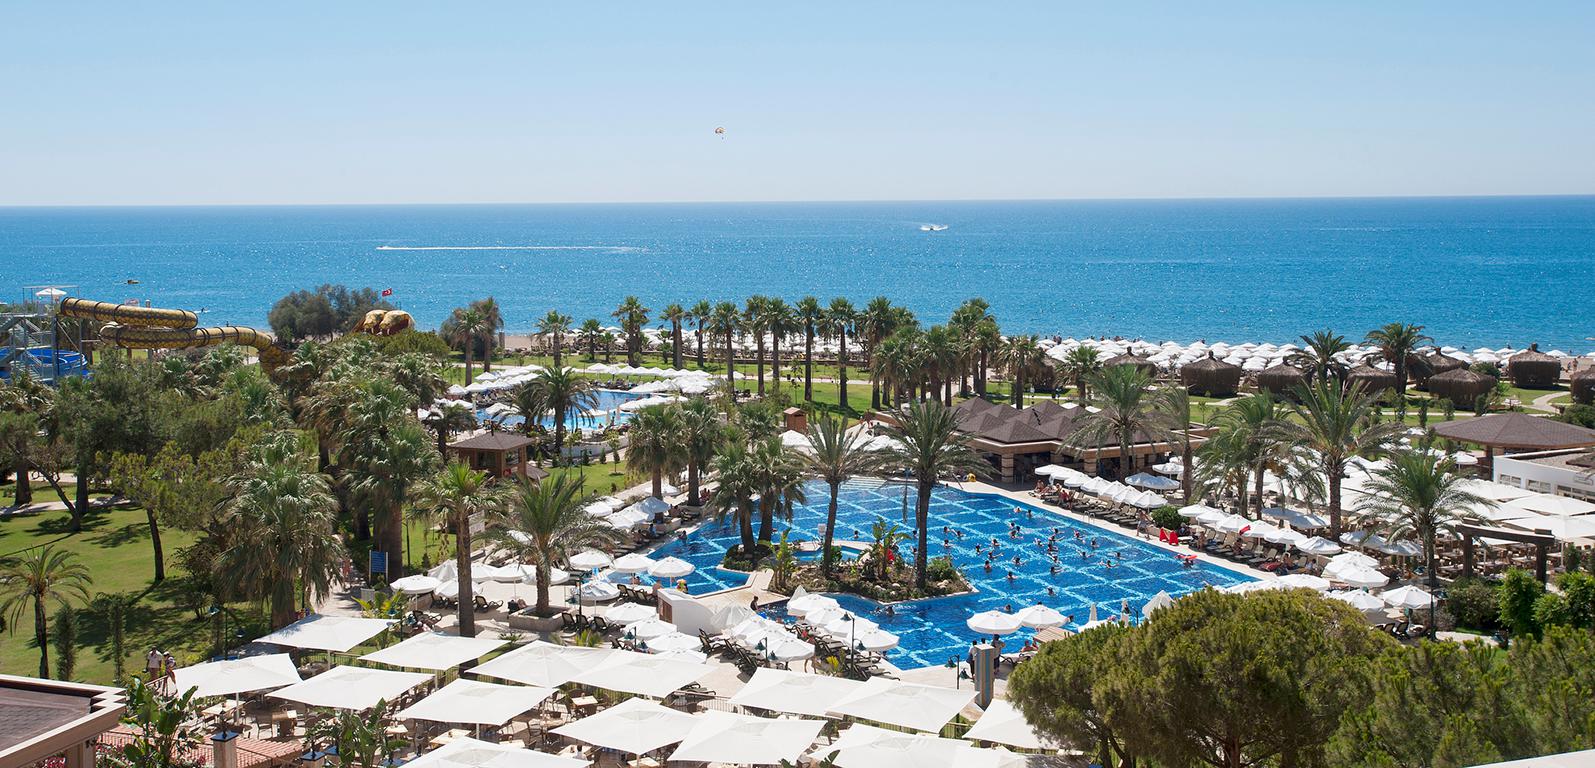 Hotel Crystal Tat Beach Golf Resort & Spa